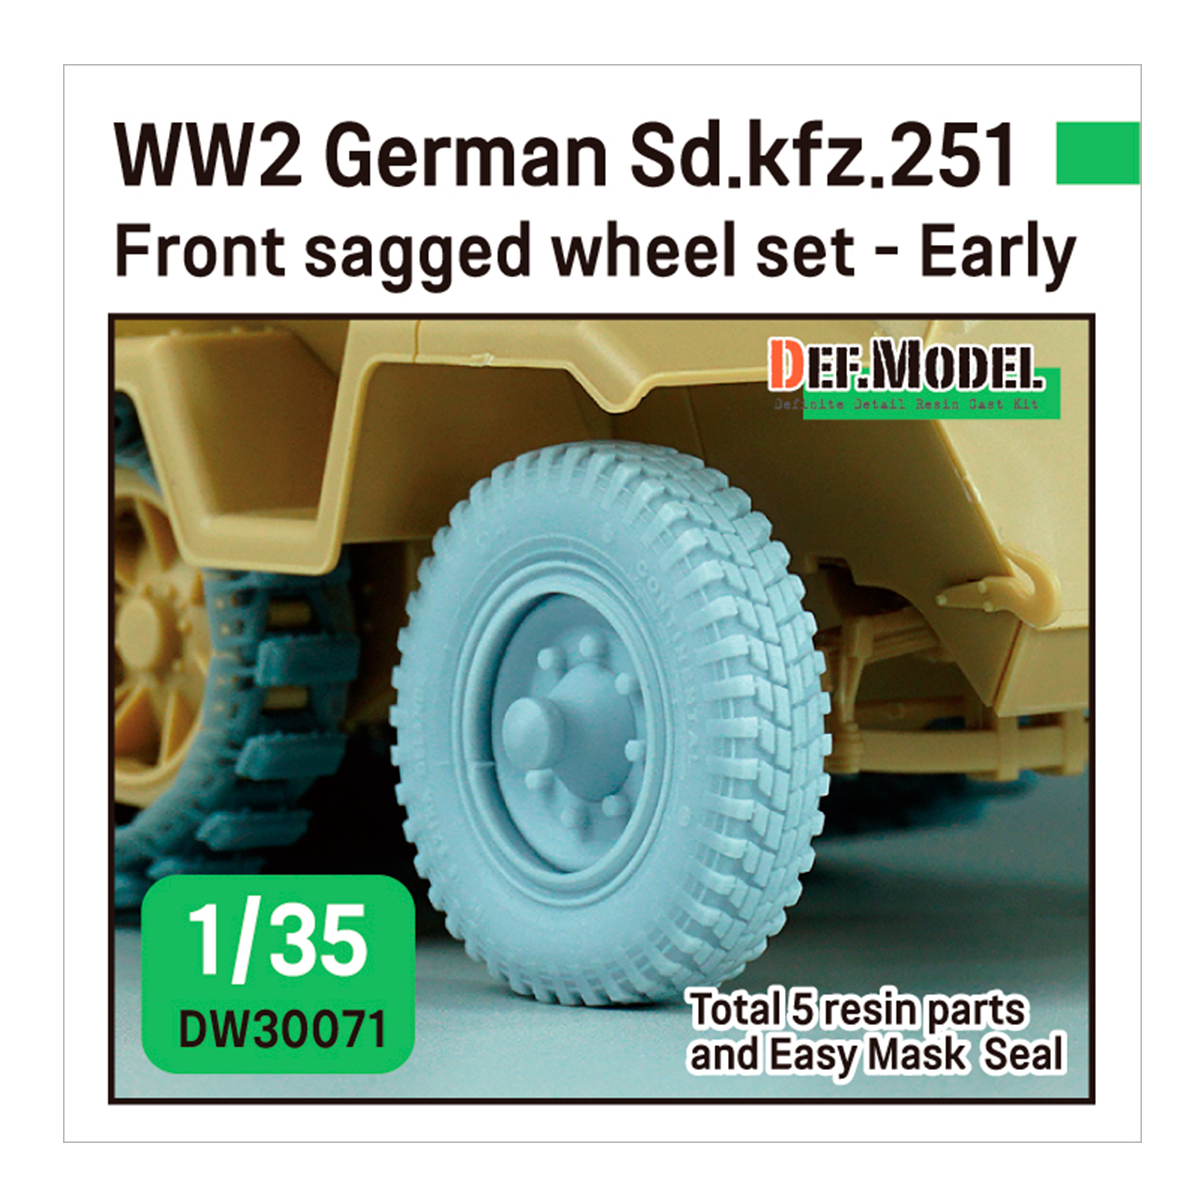 WW2 German Sd.kfz.251 Half-track front sagged wheel set – Early ( for 1/35 Sd.kfz.251 kit)